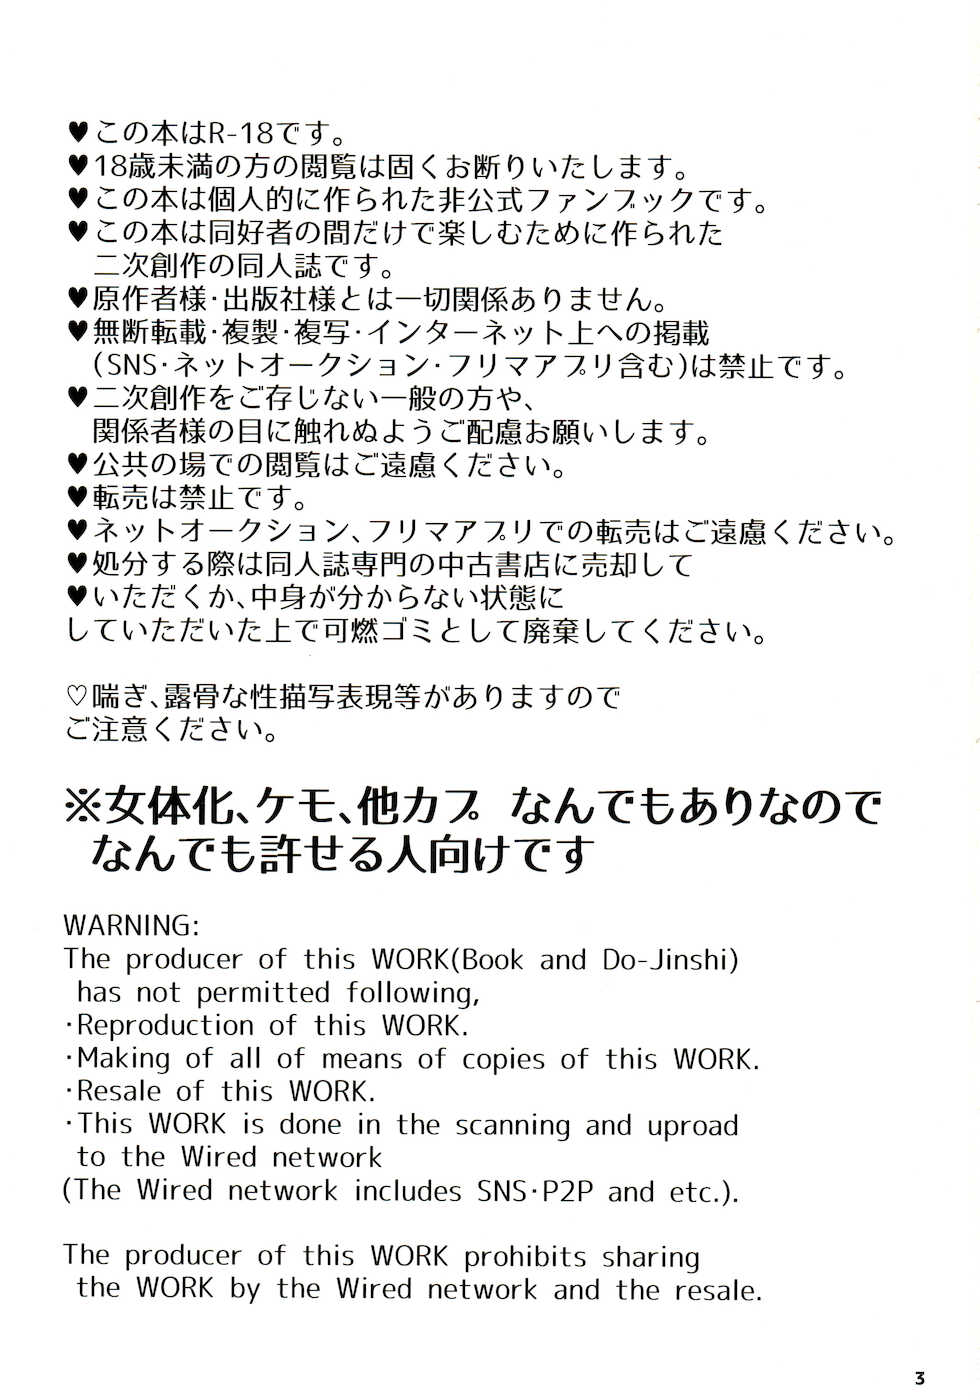 [Wodi Wodi Land (Wodi)] Twitter Log 1 (Boku no Hero Academia) - Page 3